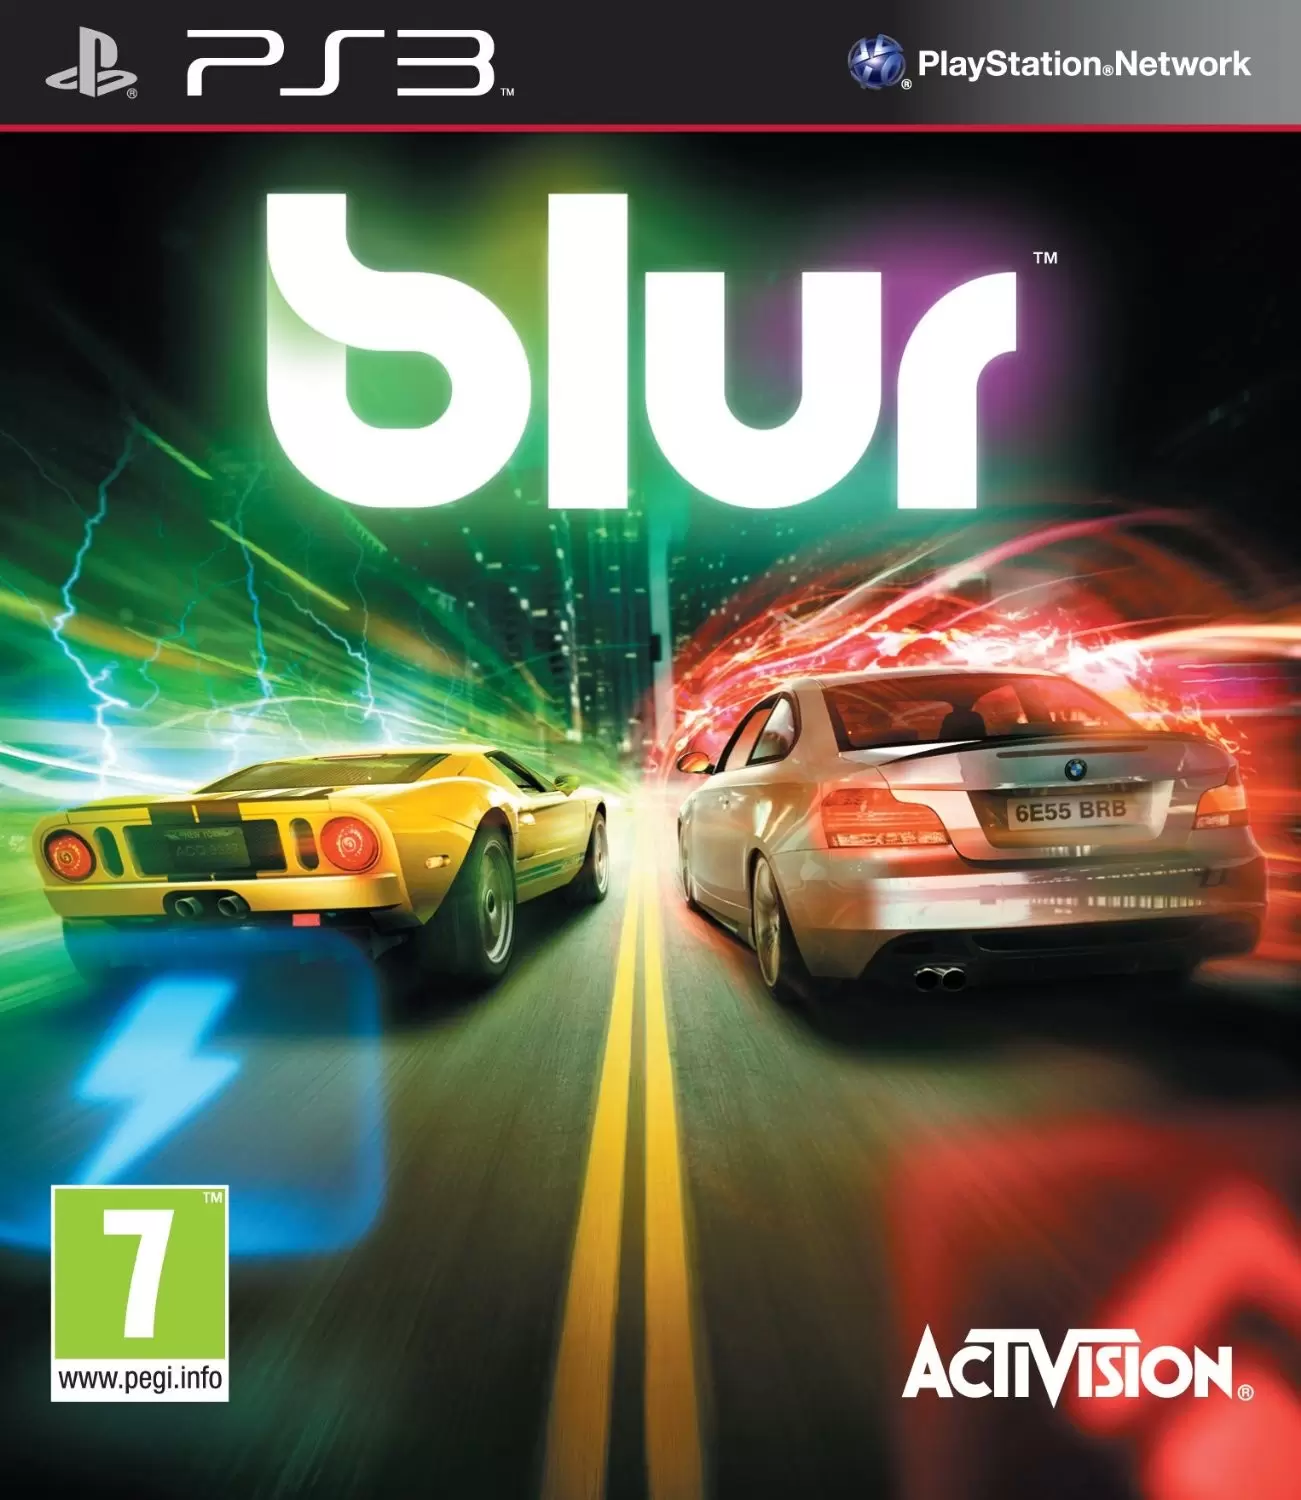 PS3 Games - Blur